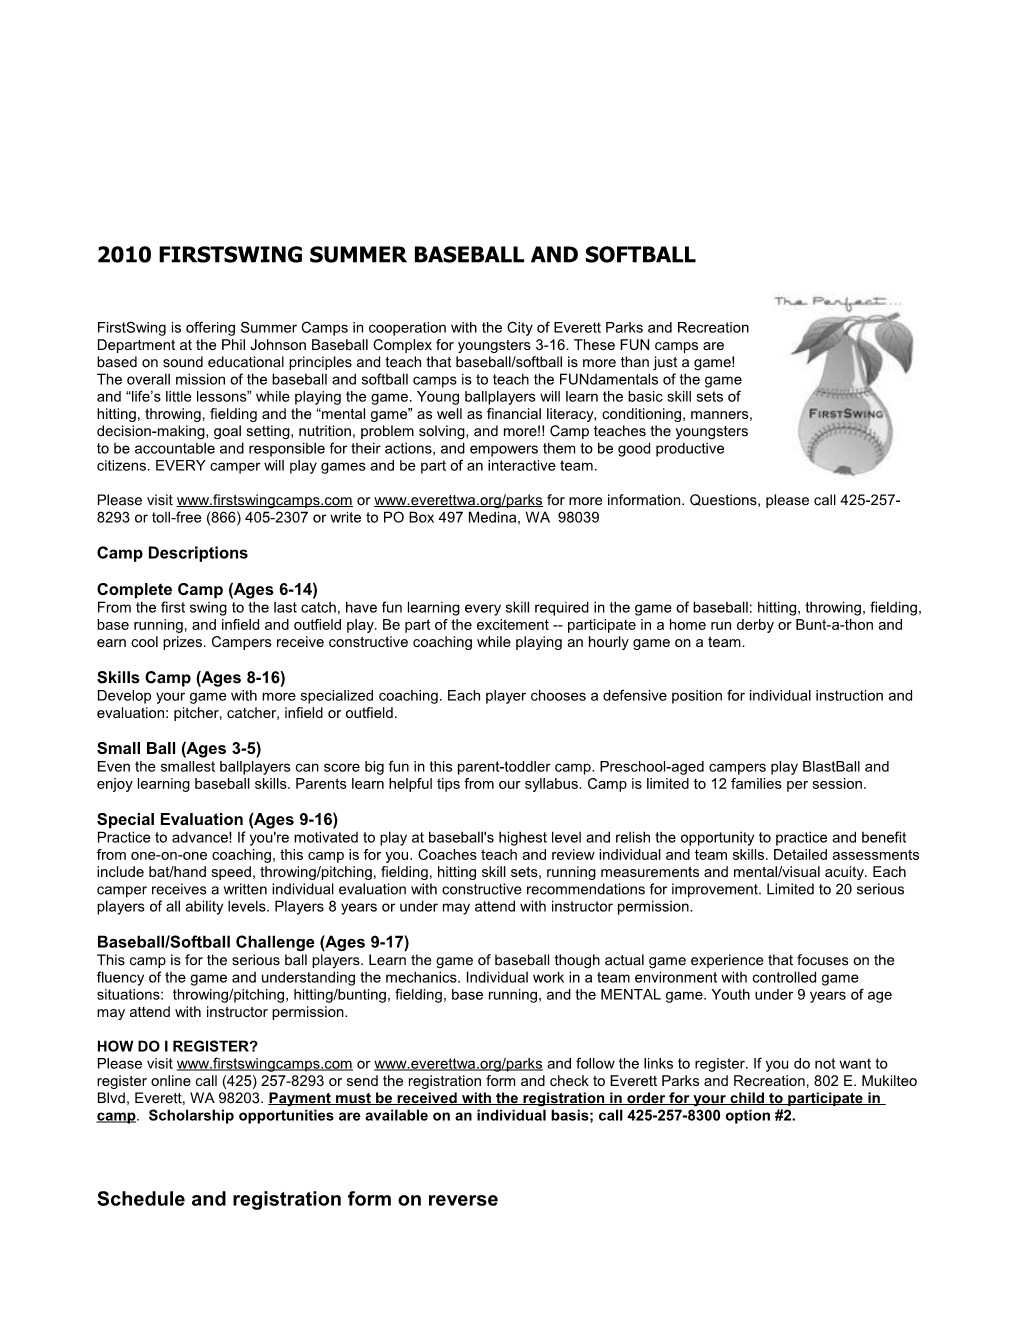 2005 Firstswing Summer Camps: Baseball and Softball